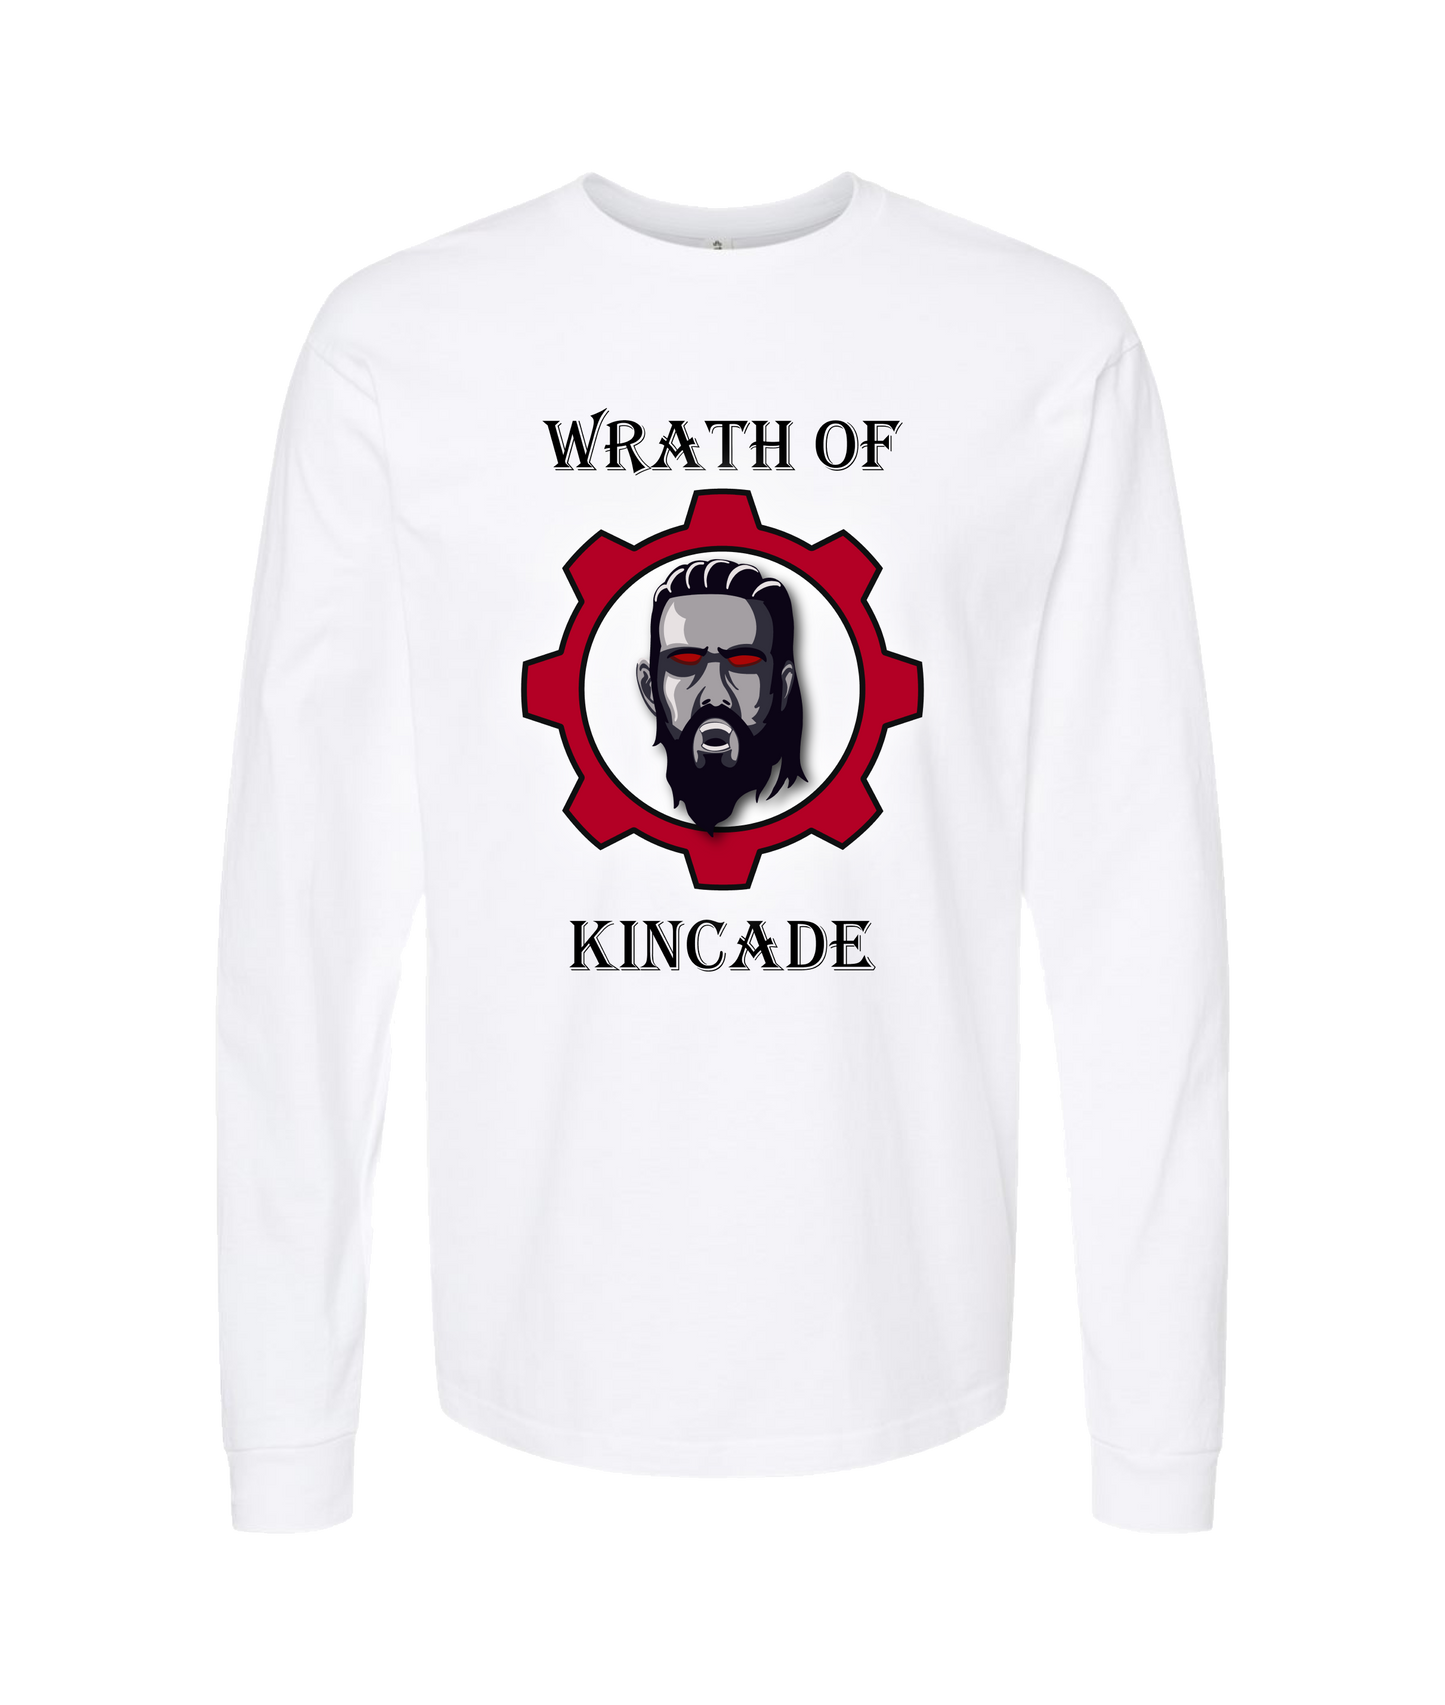 "The Pariah" Skylar Kincade - Wrath of Kincade - White Long Sleeve T